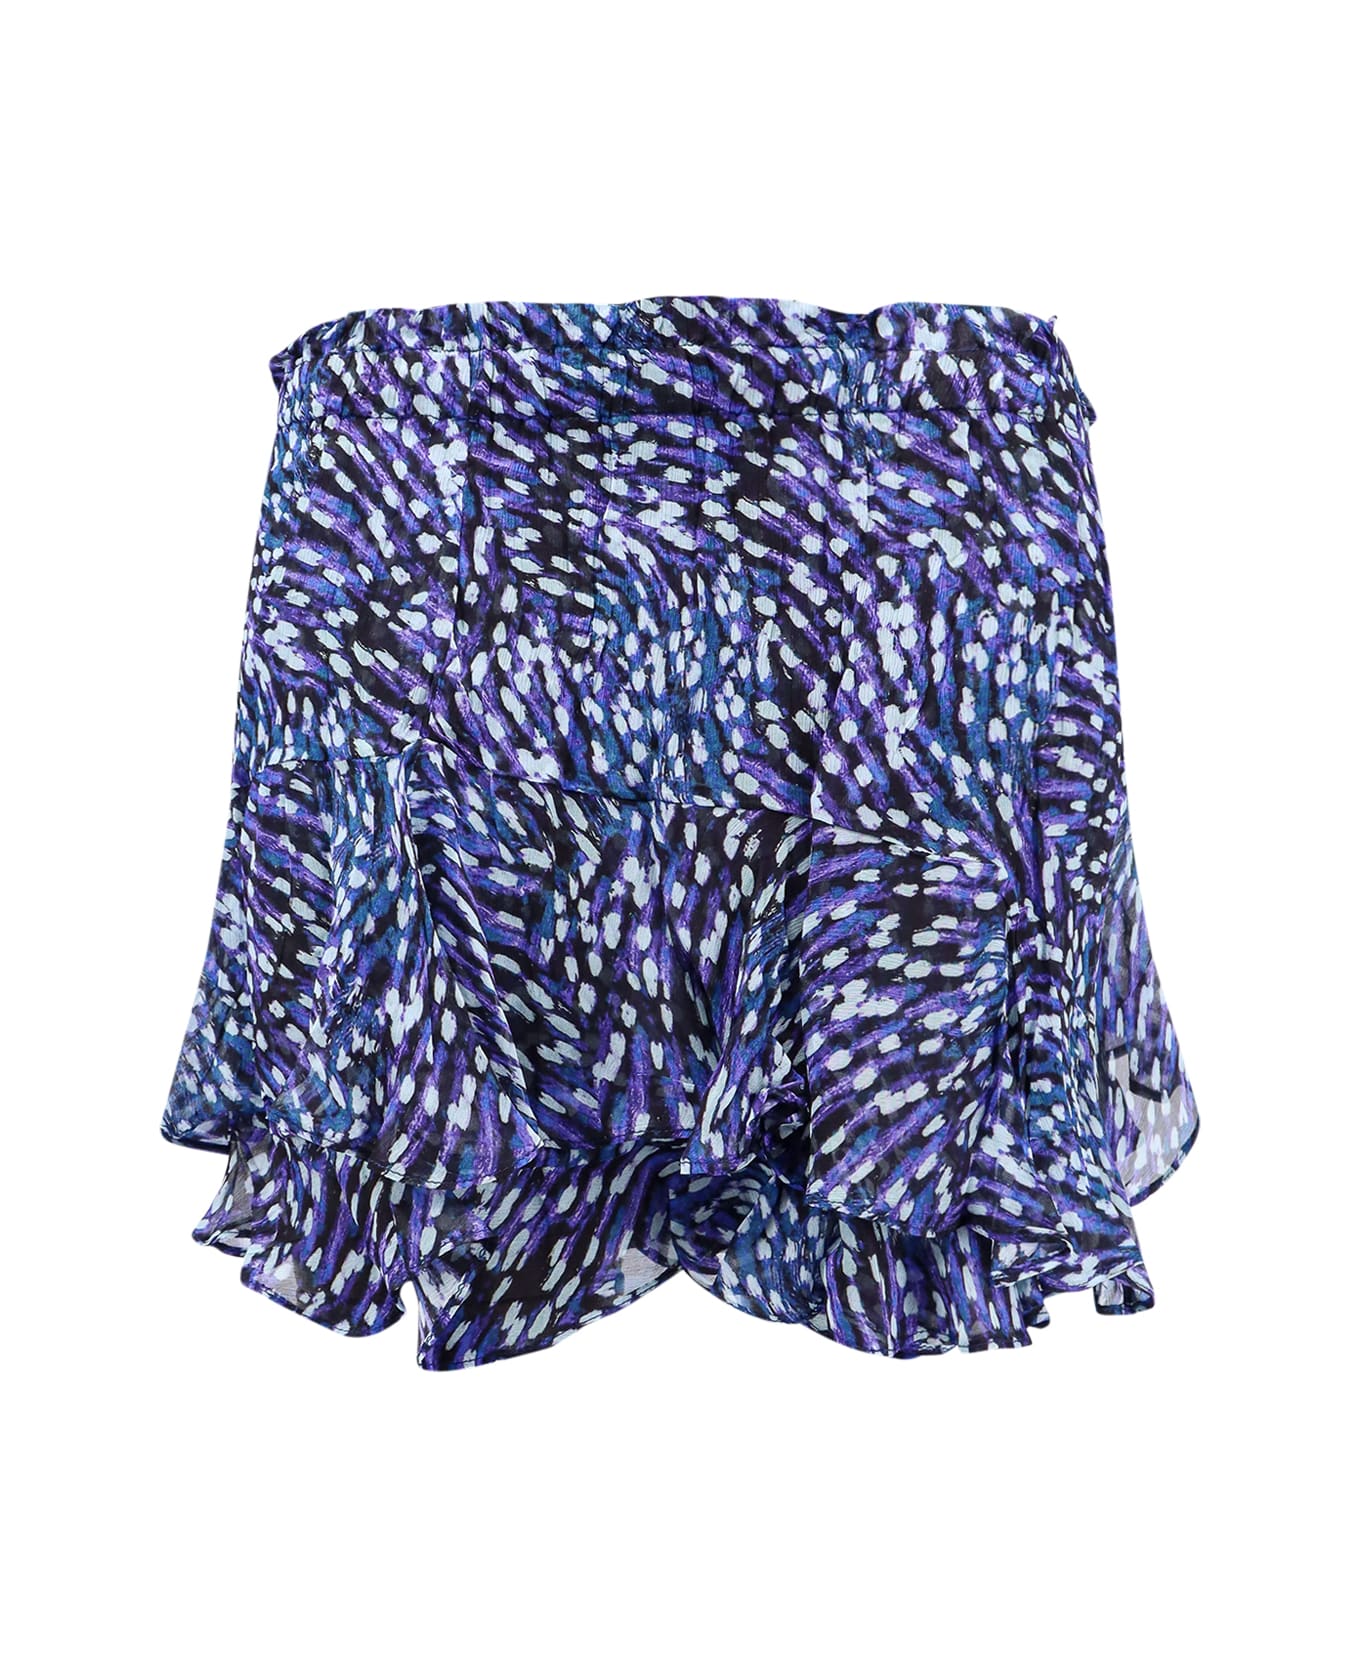 Marant Étoile Sornel Shorts - Blue スカート